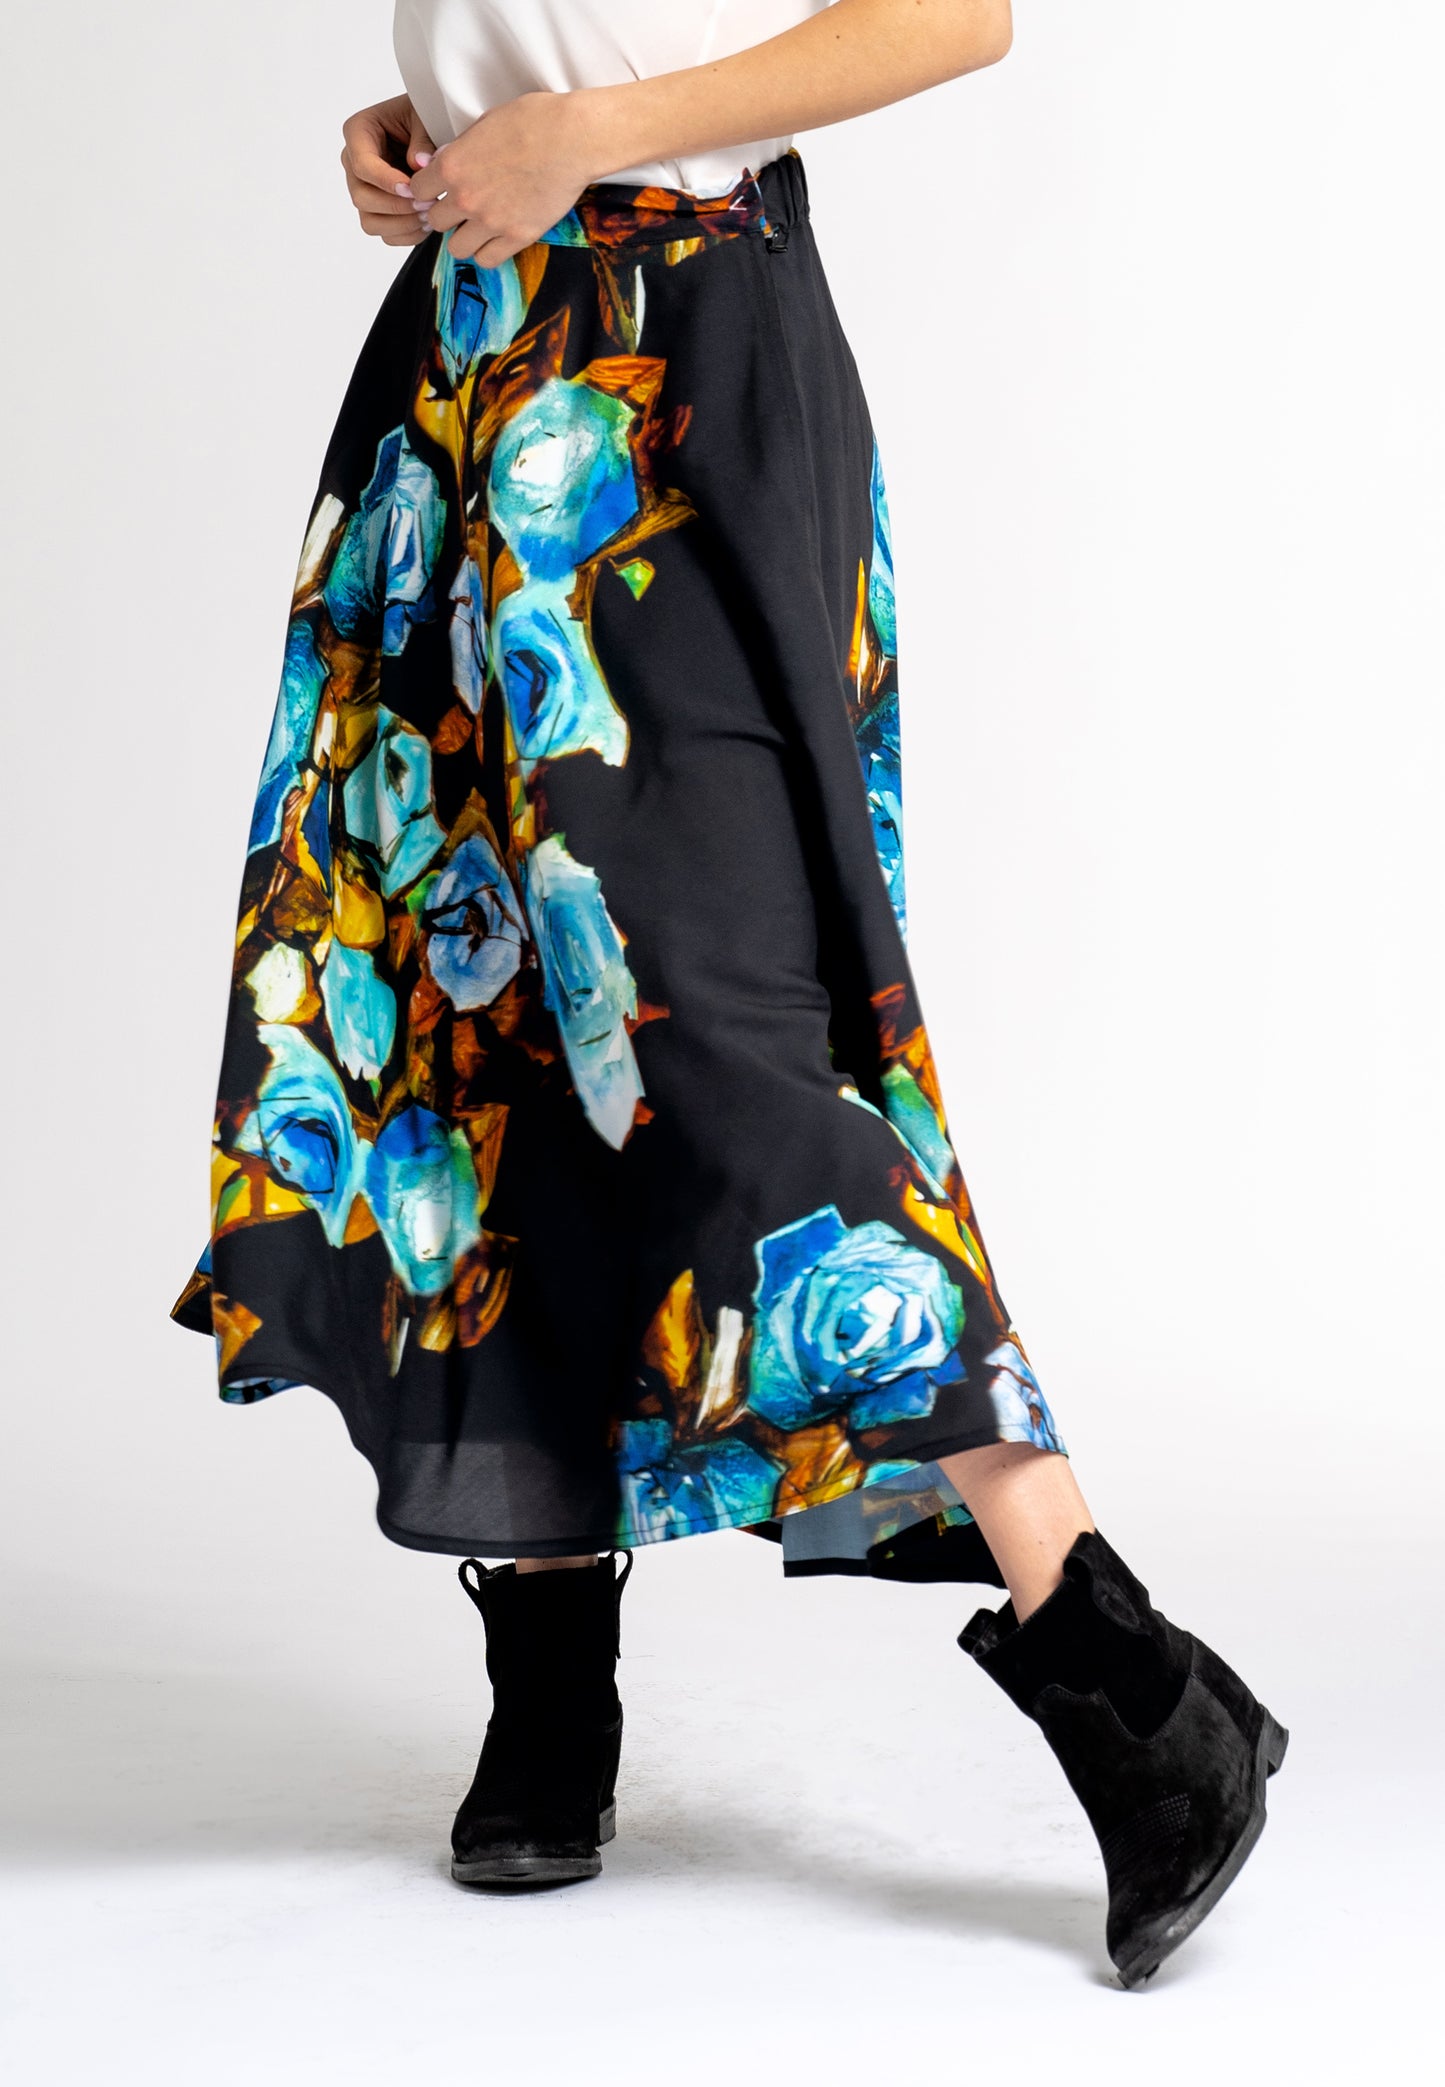 Cristina Maxi Skirt with Hidden Pockets - Vibrant Floral Print, High-Waisted, Eco-Friendly Fabric